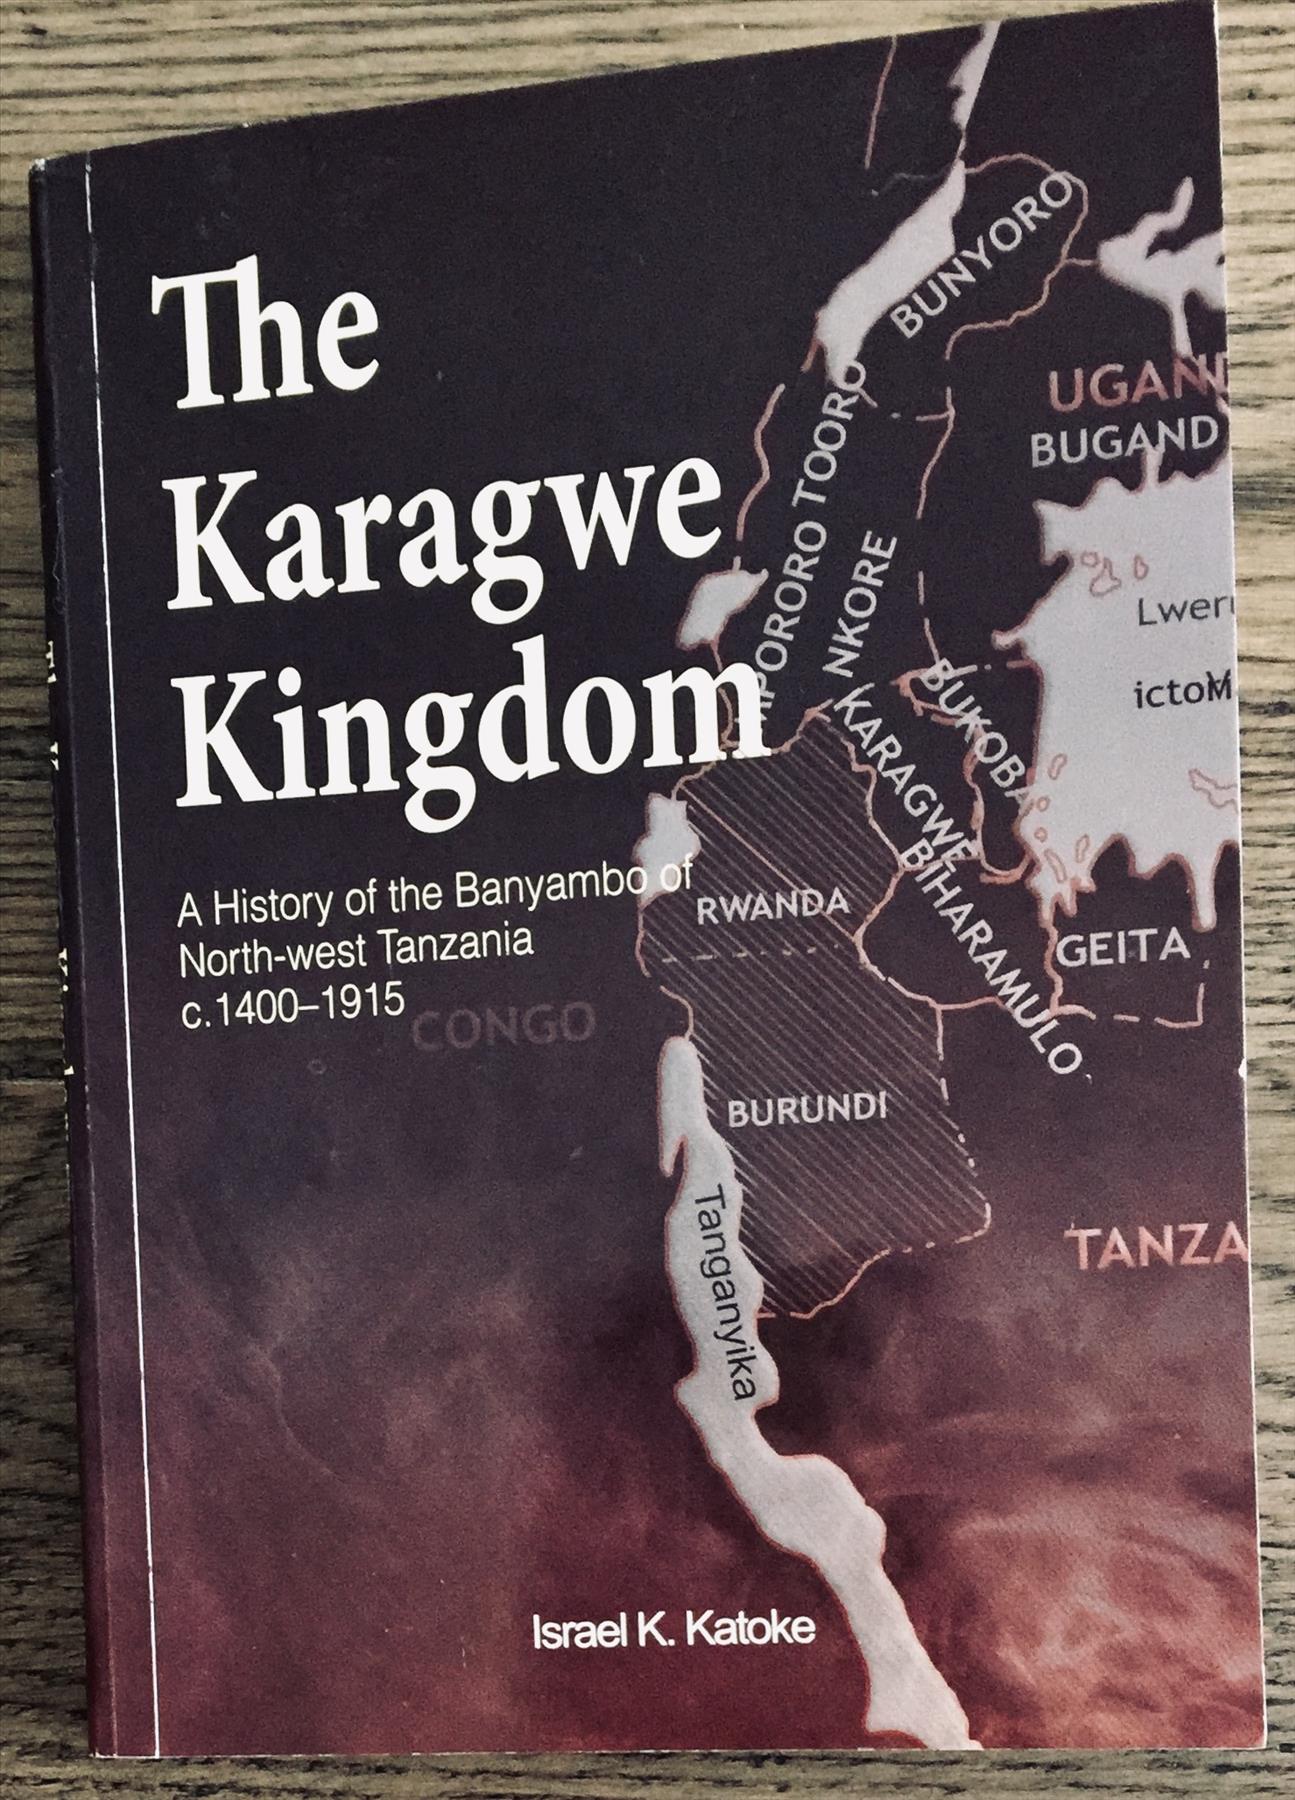 The Karagwe Kingdom: A History of the Banyambo of Northwest Tanzania c. 1400-1915. By Israel K. Katoke